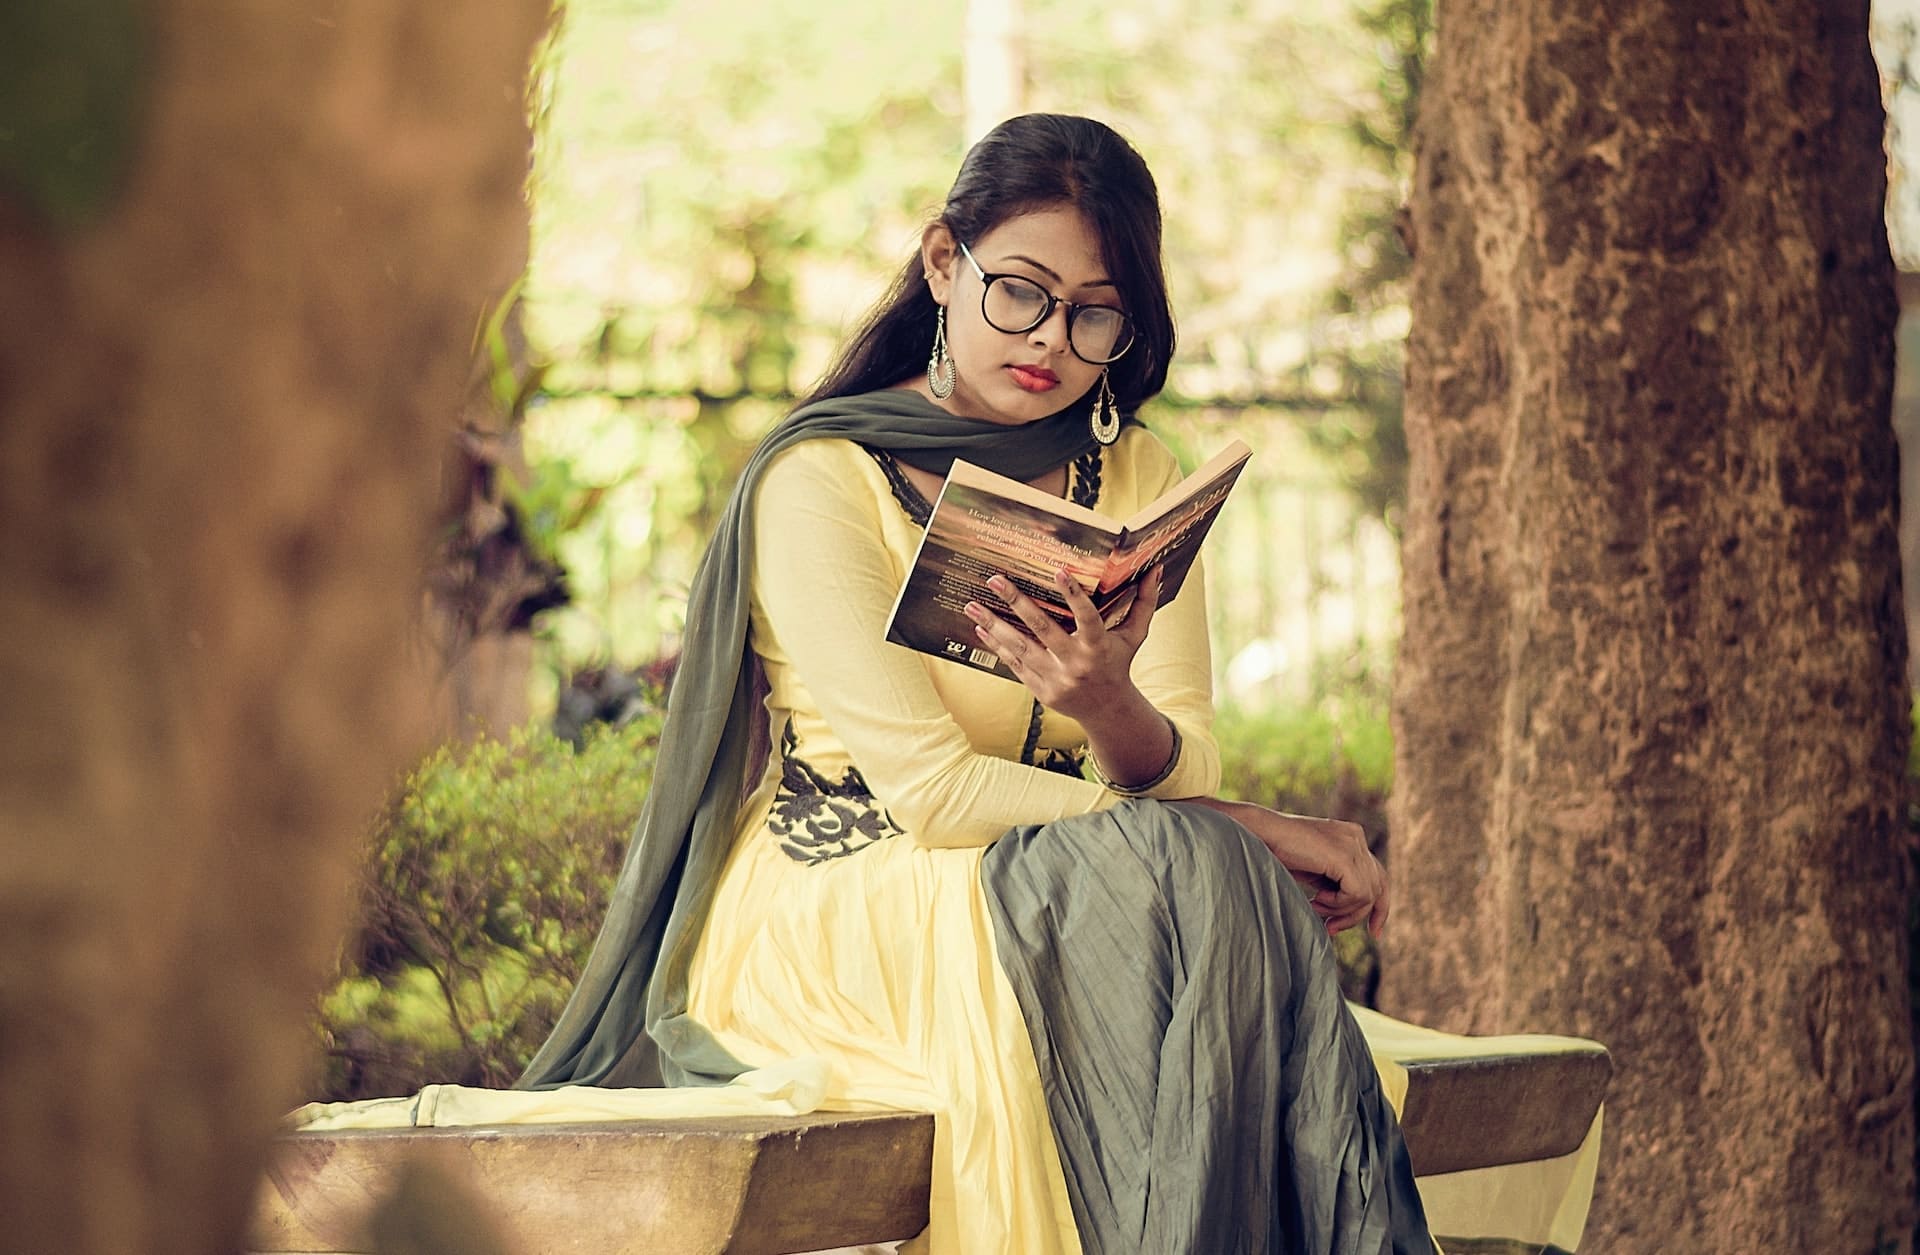 Photo of Bangladeshi woman reading by Joy Deb for Pexels b